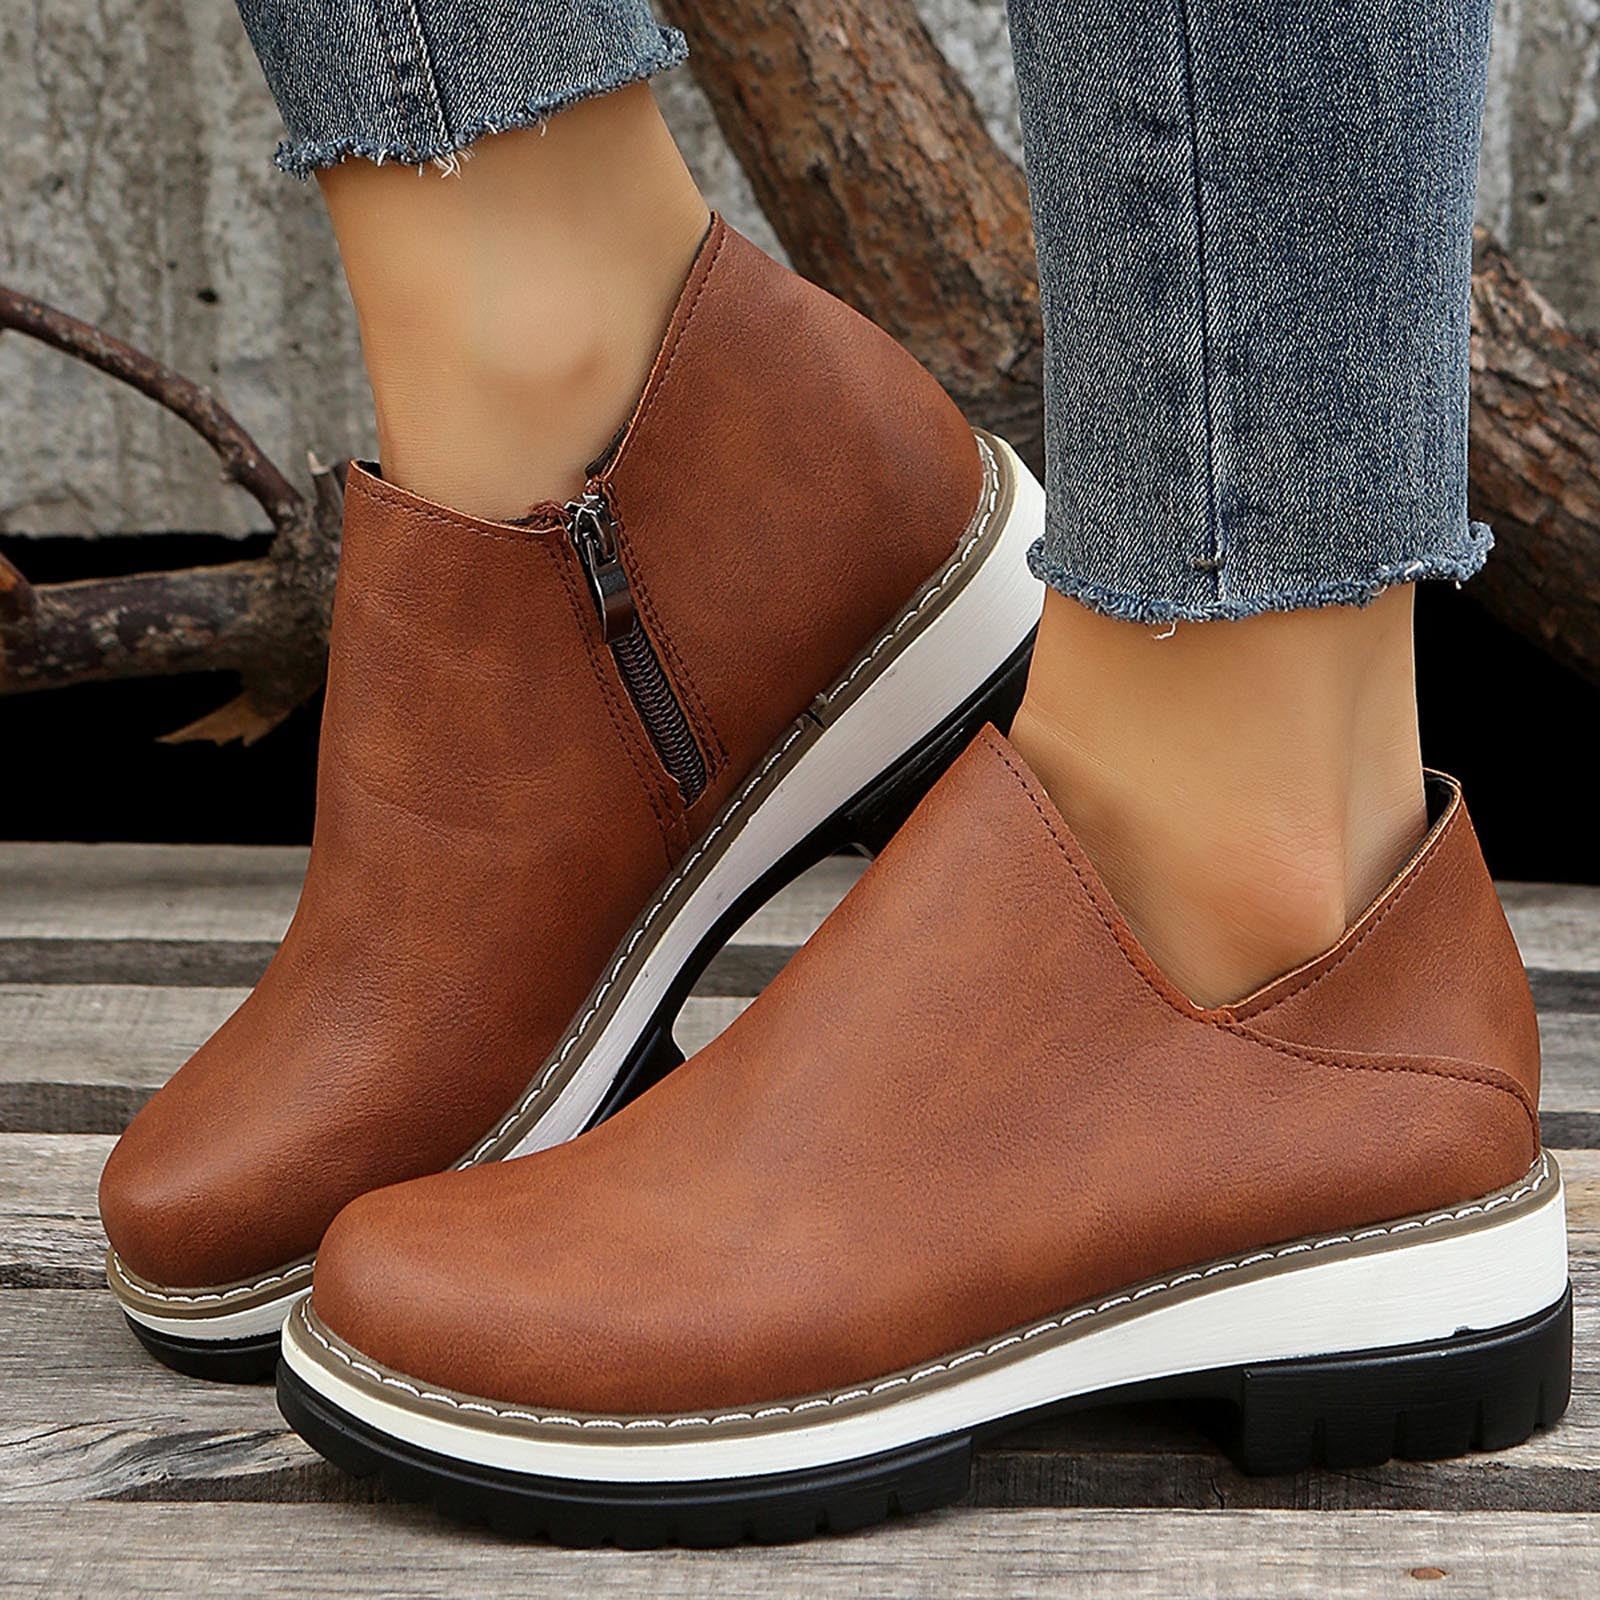 Ladies Women's Flat Ankle Boots Low Heel Fashion Strap Silver Buckle Shoe  Sizes | eBay